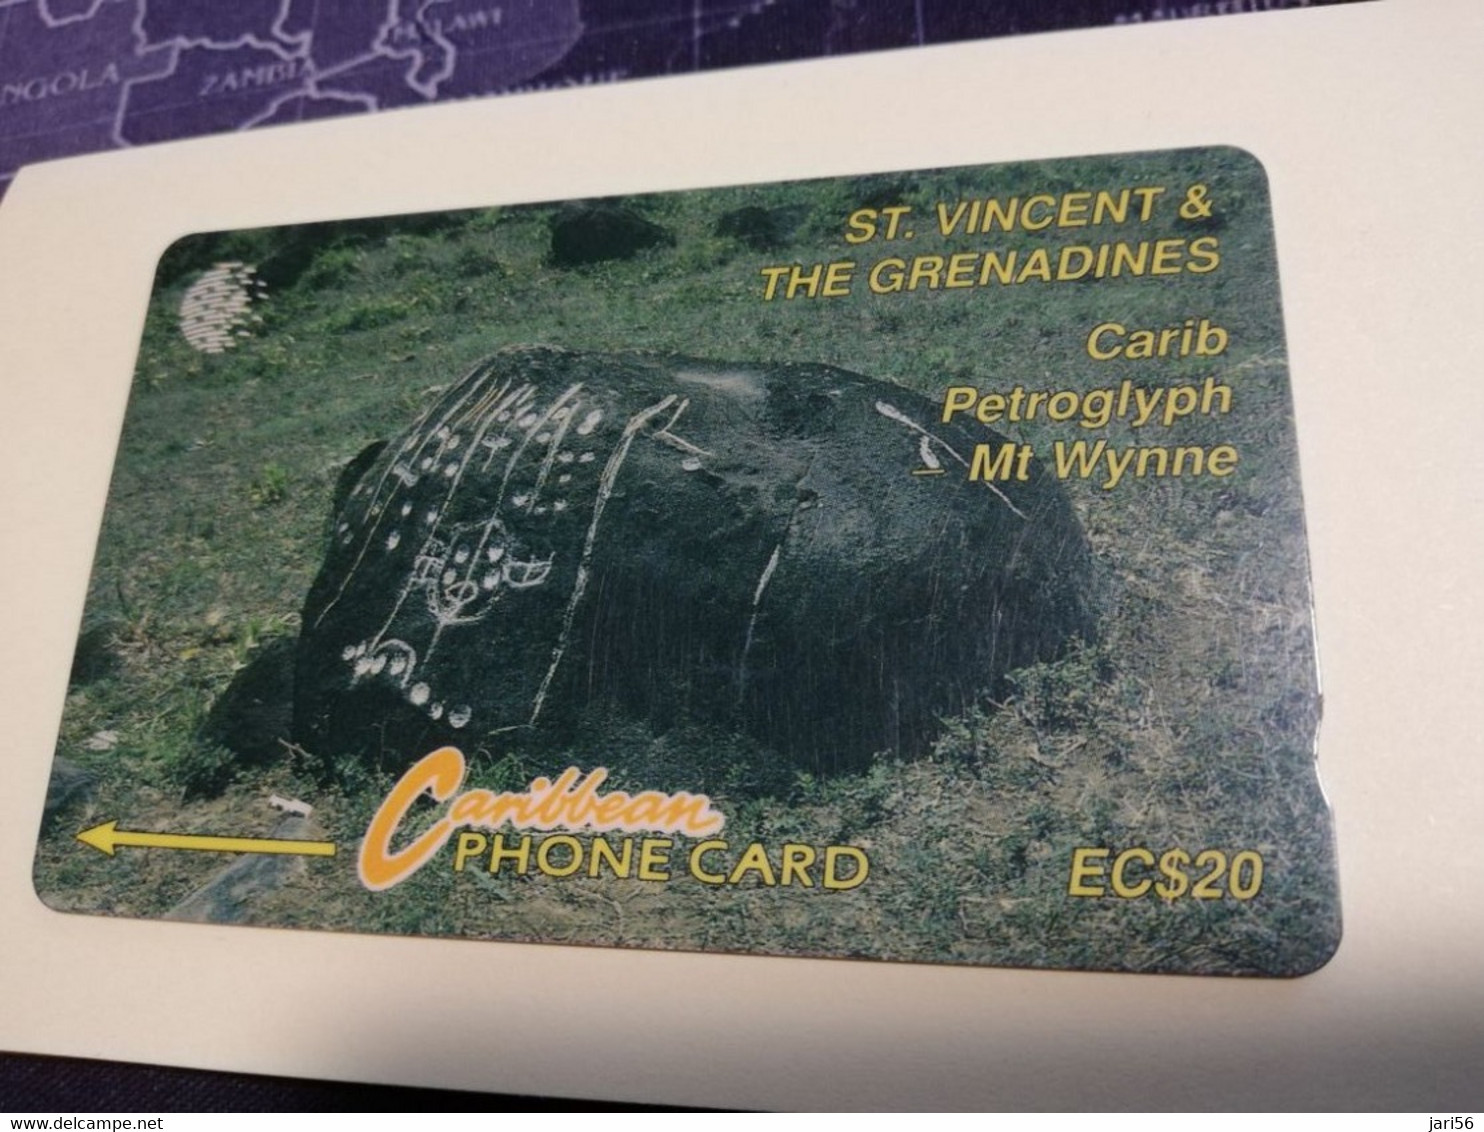 ST VINCENT & GRENADINES  GPT CARD   $ 20,- 10CSVB   CARIB PETROGLYPH       C&W    Fine Used  Card  **3366** - St. Vincent & Die Grenadinen